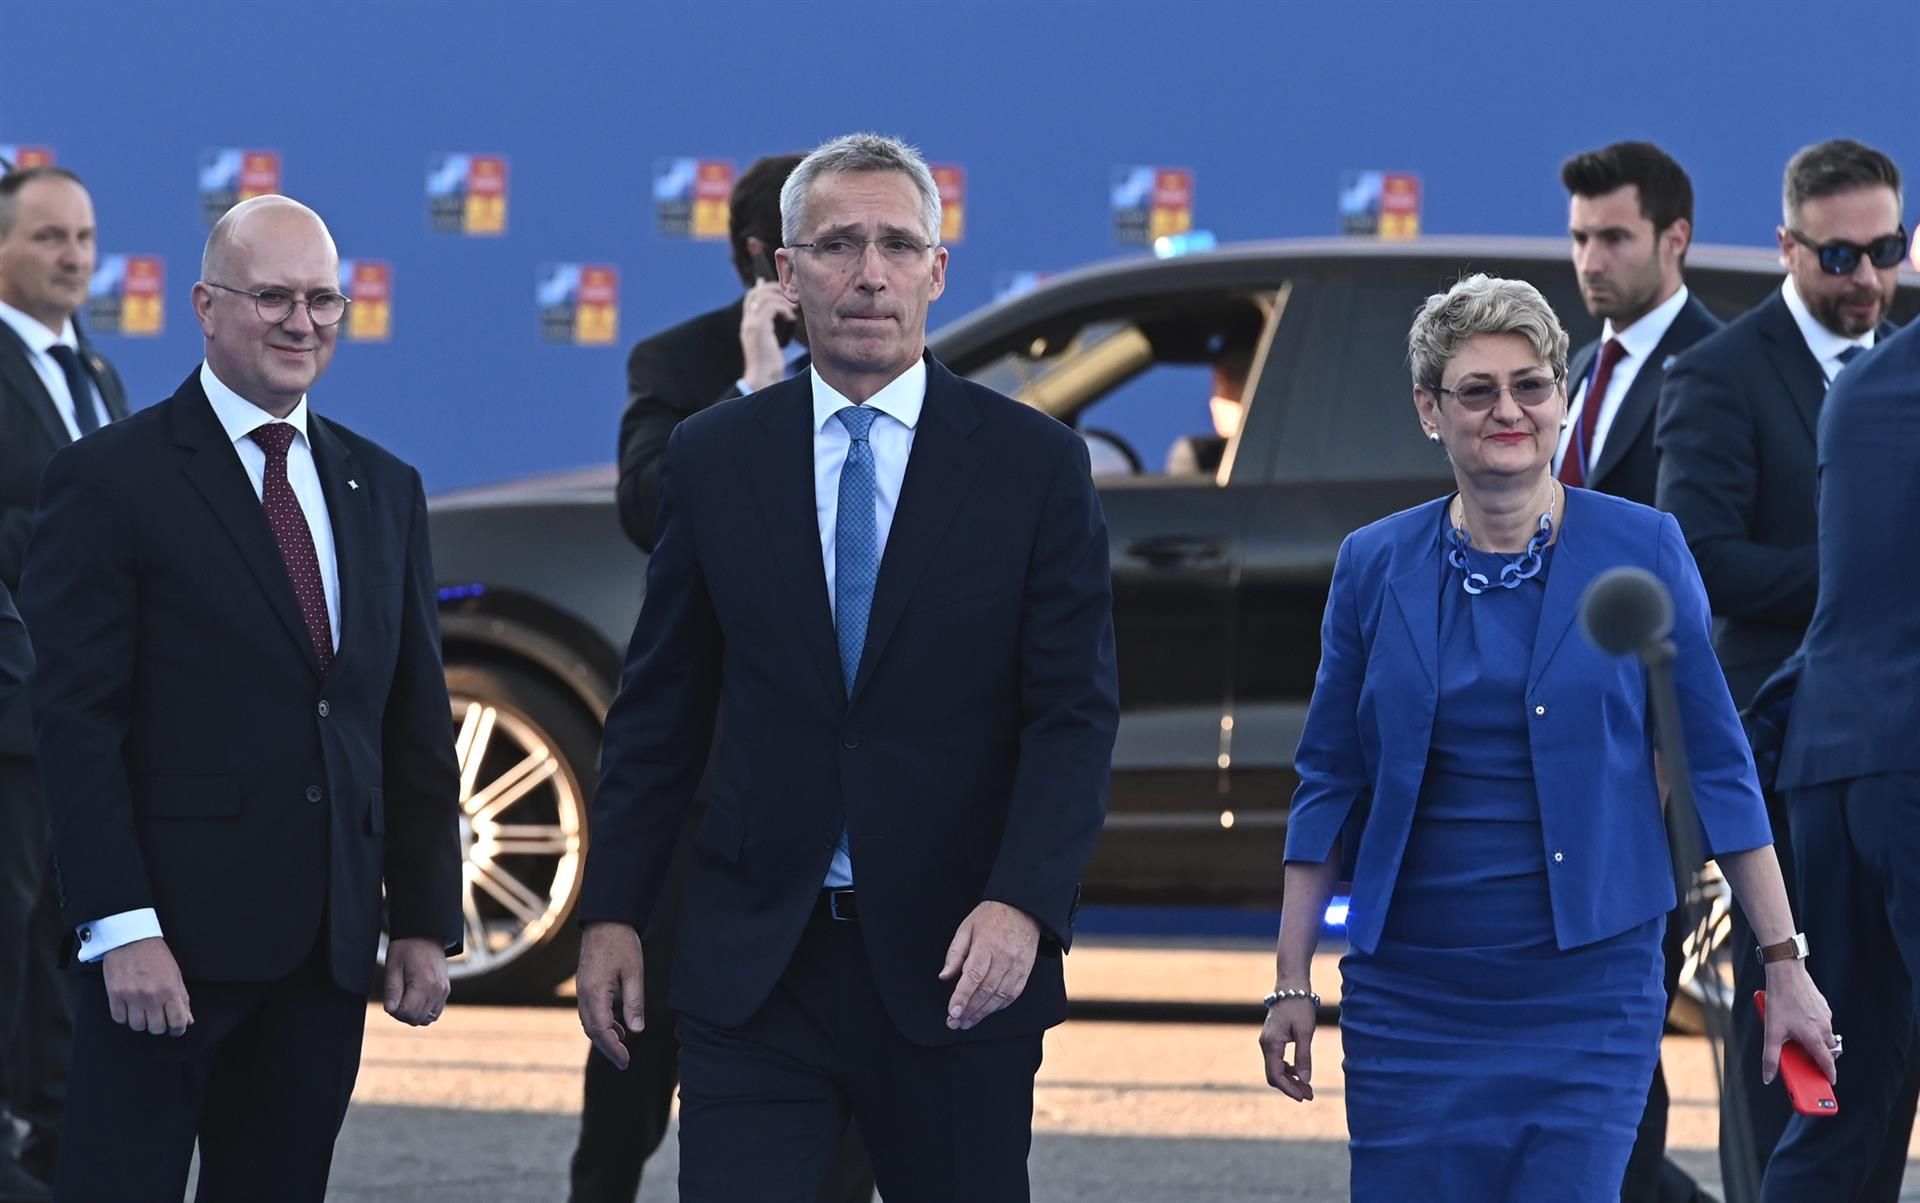 El secretario general de la Alianza Atlántica, Jens Stoltenberg, a su llegada a la primera jornada de la cumbre de la OTAN este miércoles en Ifema